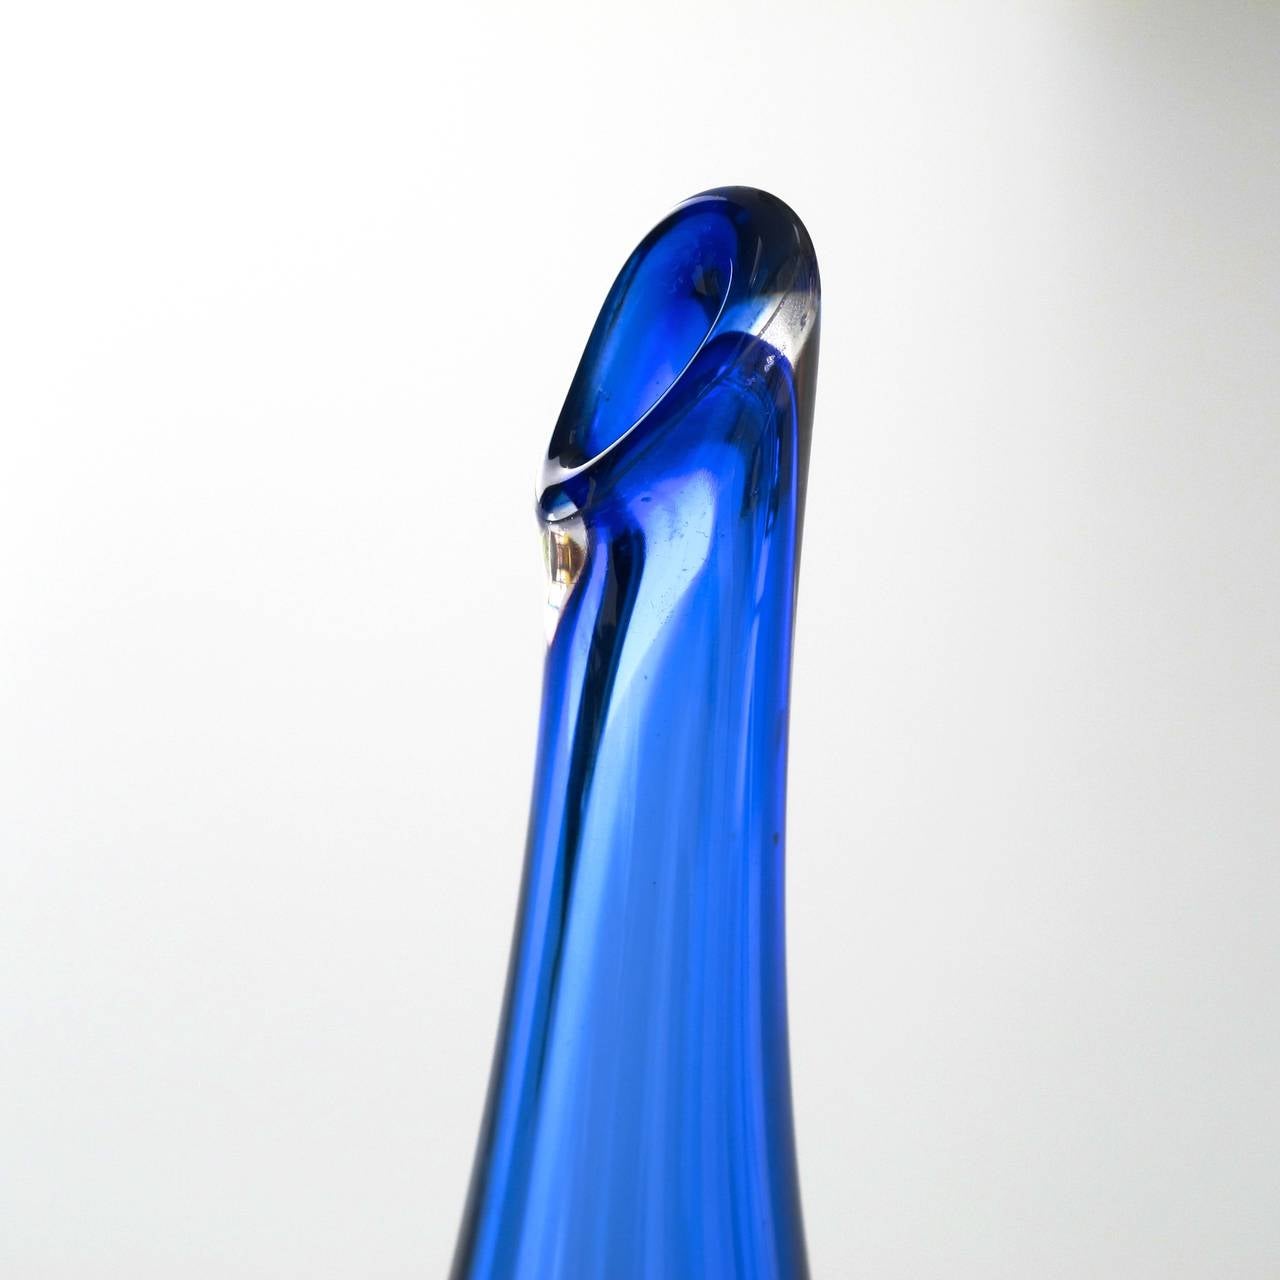 Mid-Century Modern One-Off Floris Meydam Art Glass, Leerdam Unica, 1957 For Sale 1